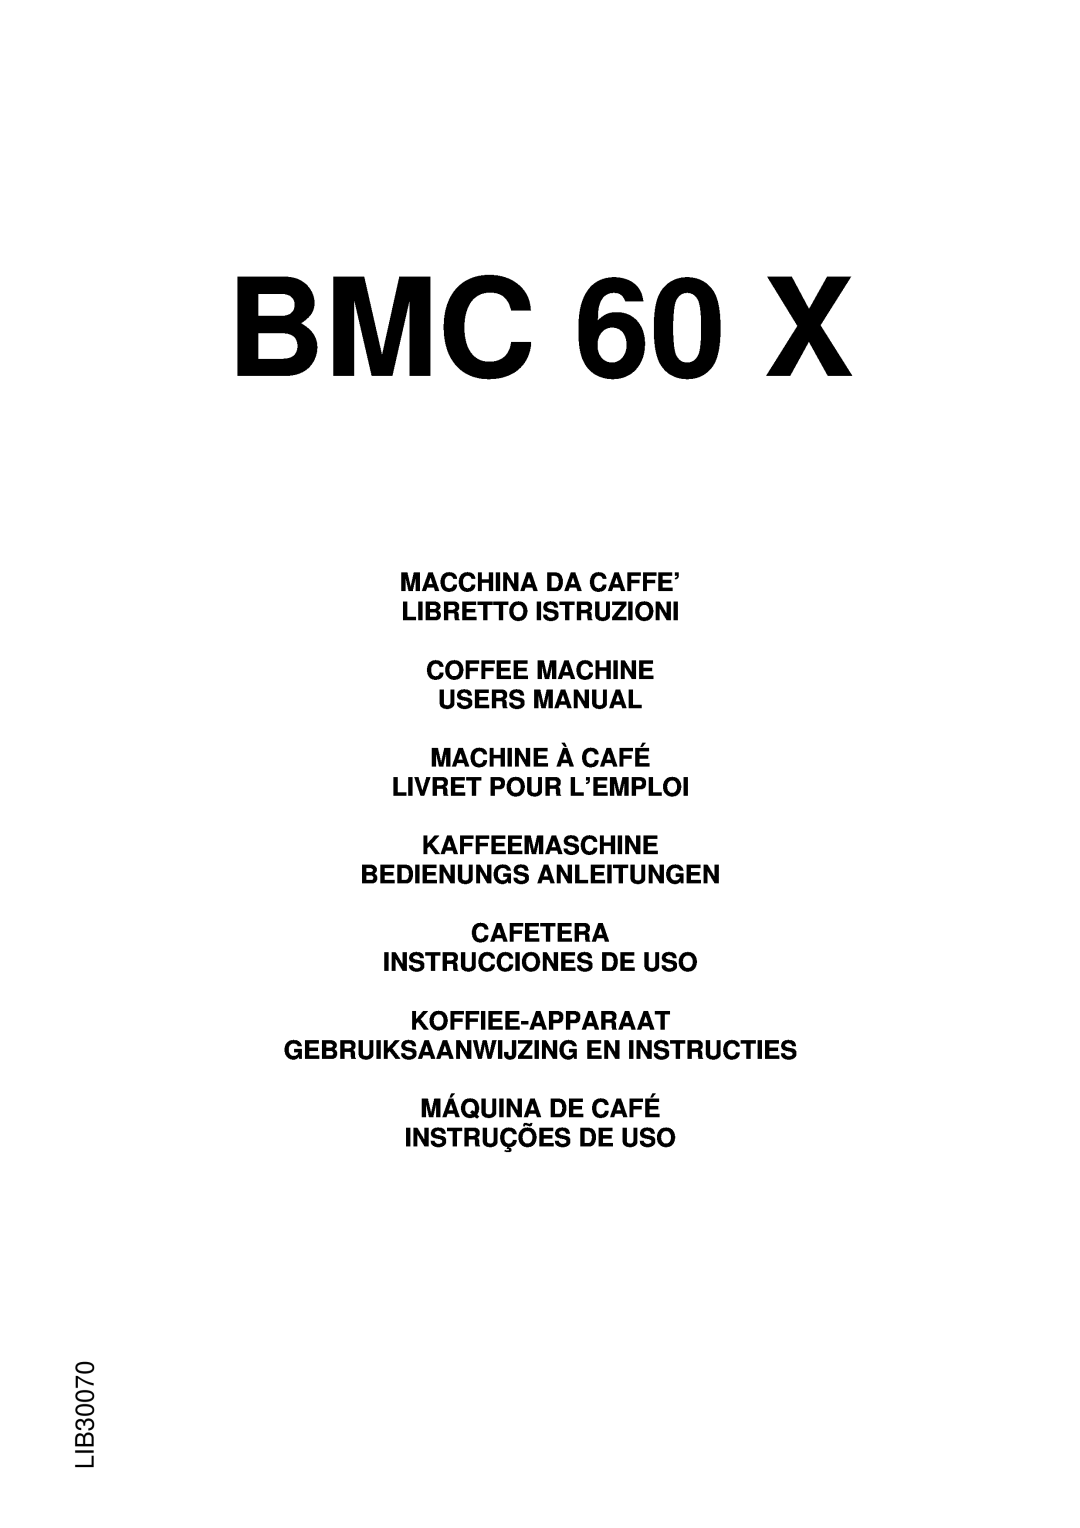 Candy BMC 60 X user manual Bmc, Macchina Da Caffe’ Libretto Istruzioni, Livret Pour L’Emploi Kaffeemaschine, LIB30070 